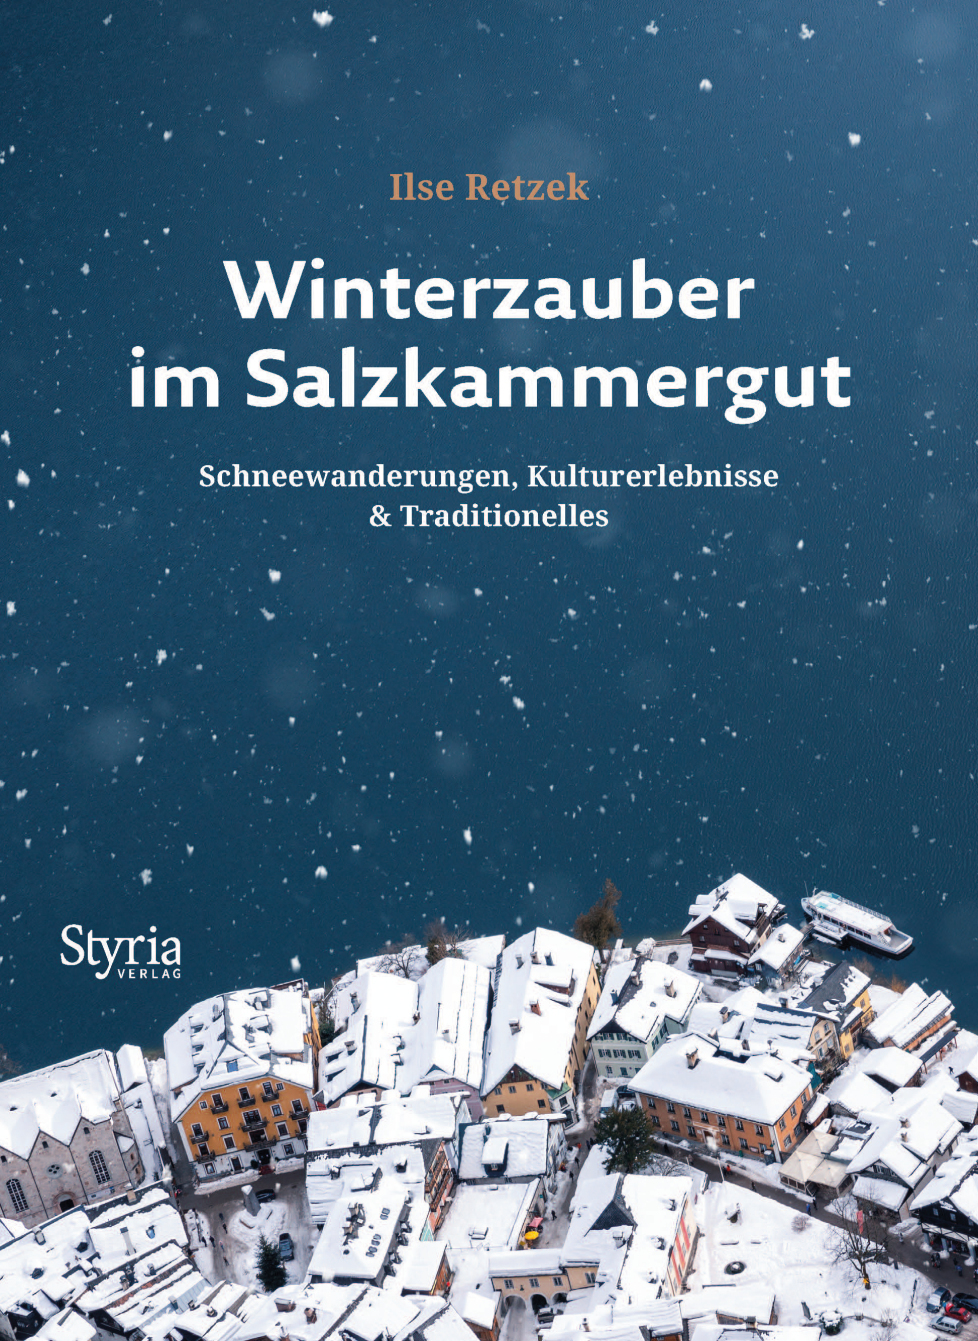 Winterzauber im Salzkammergut